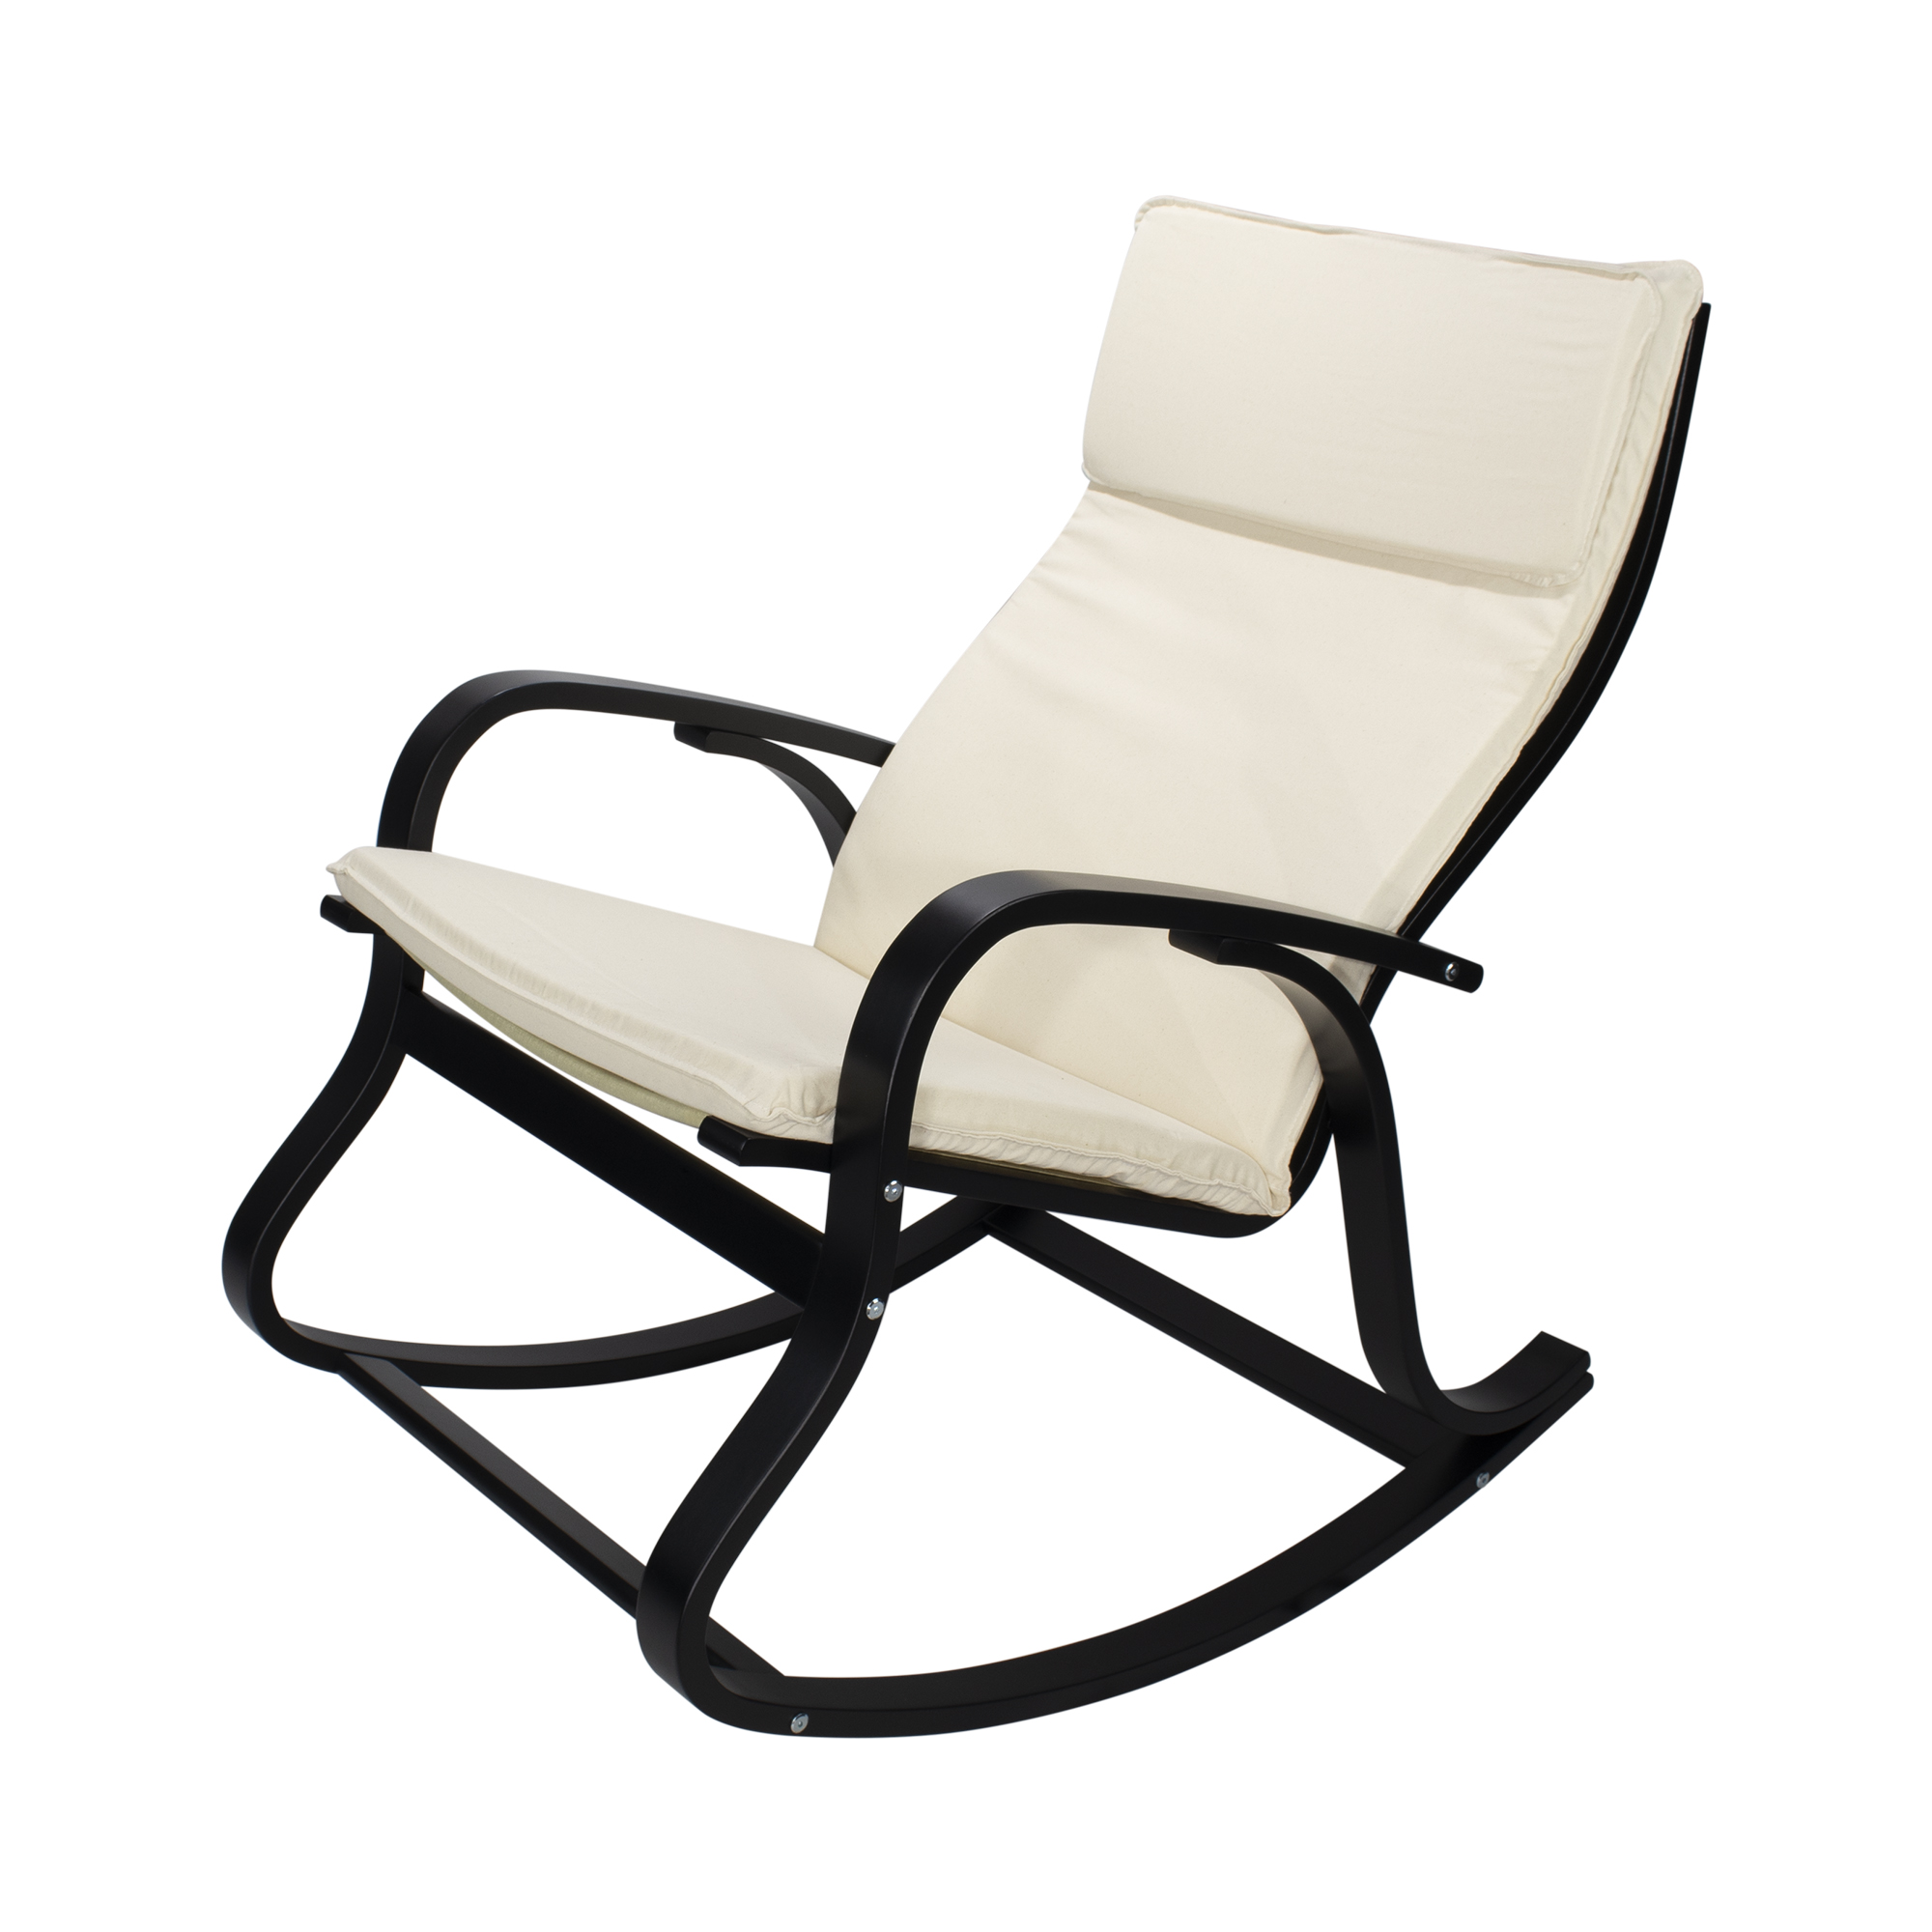 Relaxstuhl Schwingstuhl ohne Fussteil - Farbe: Naturweiß D1